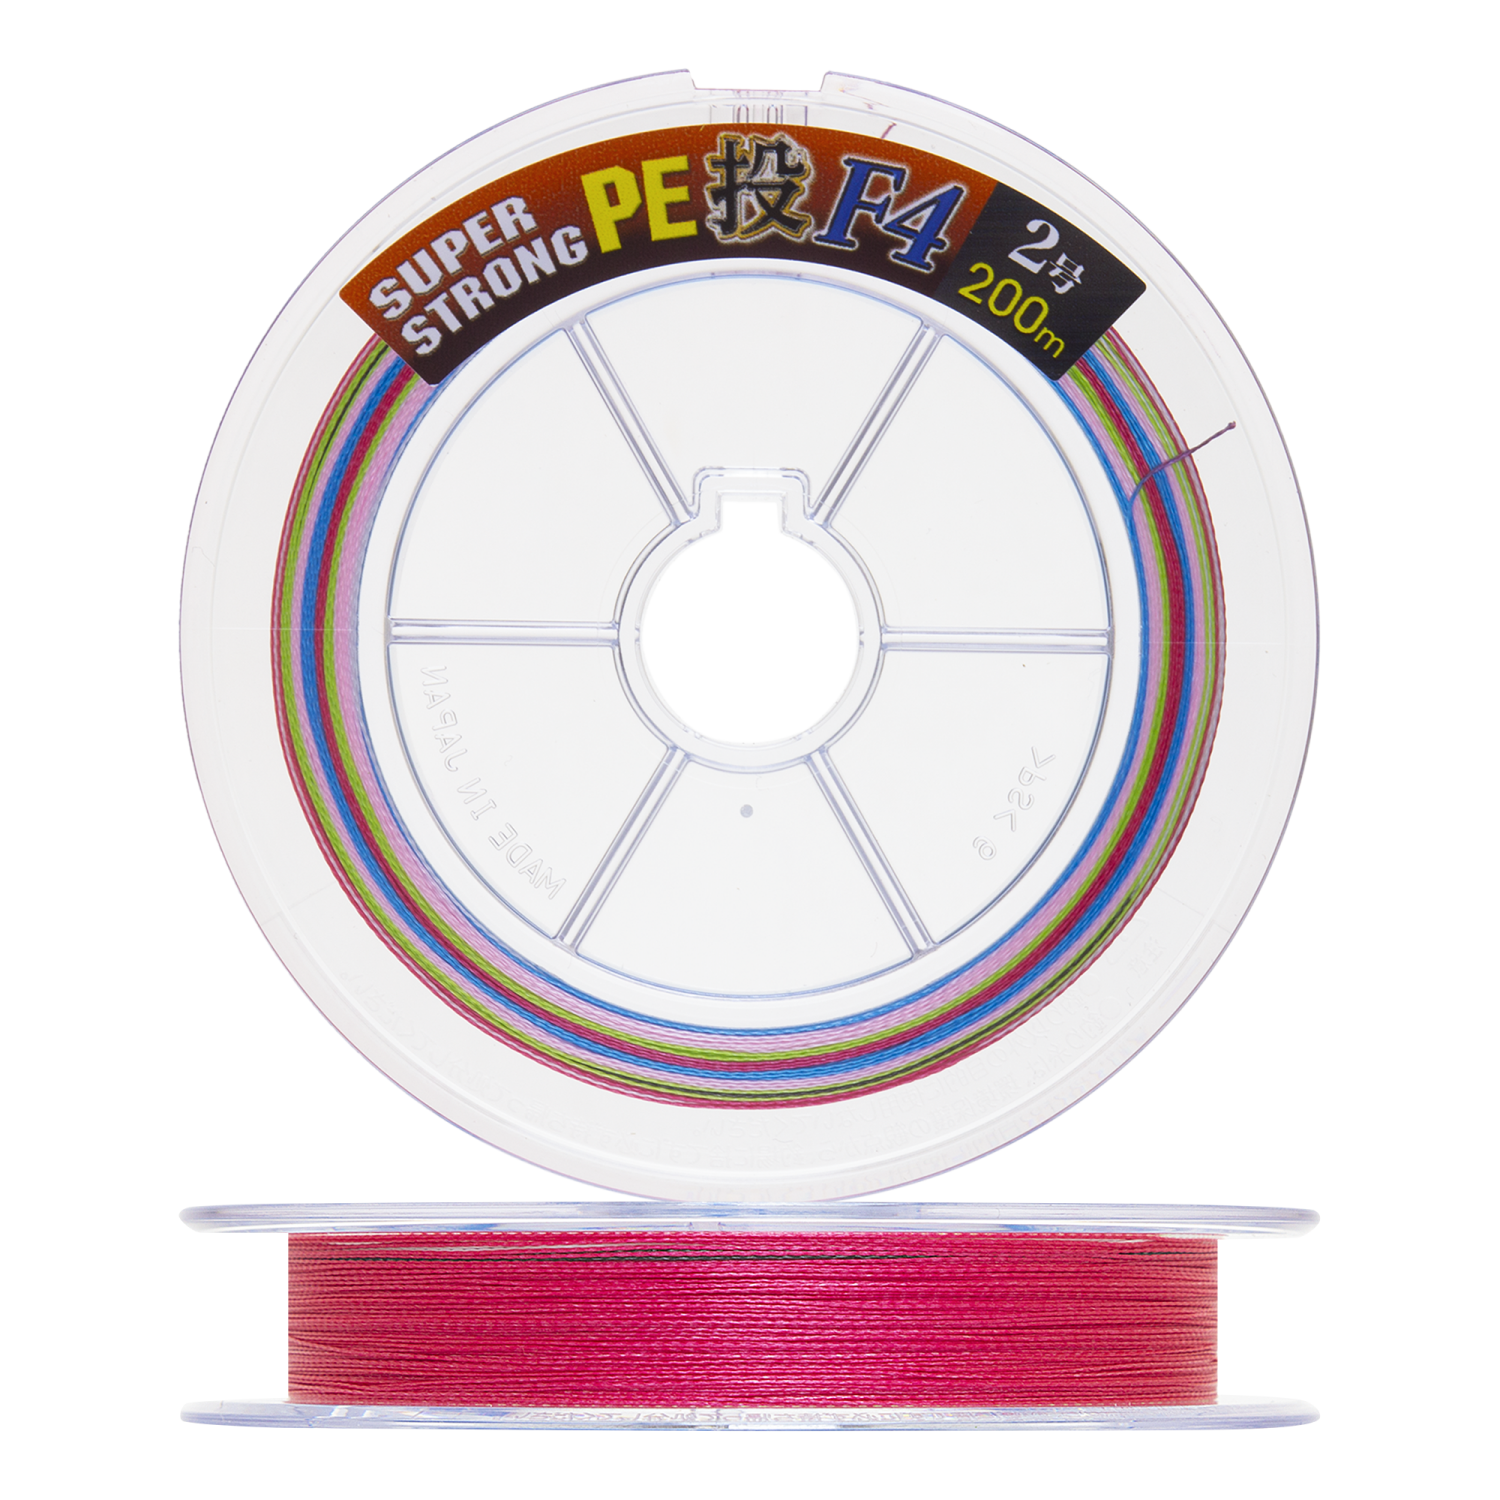 Шнур плетеный Toray Super Strong PE Nage F4 #2 200м (multicolor)